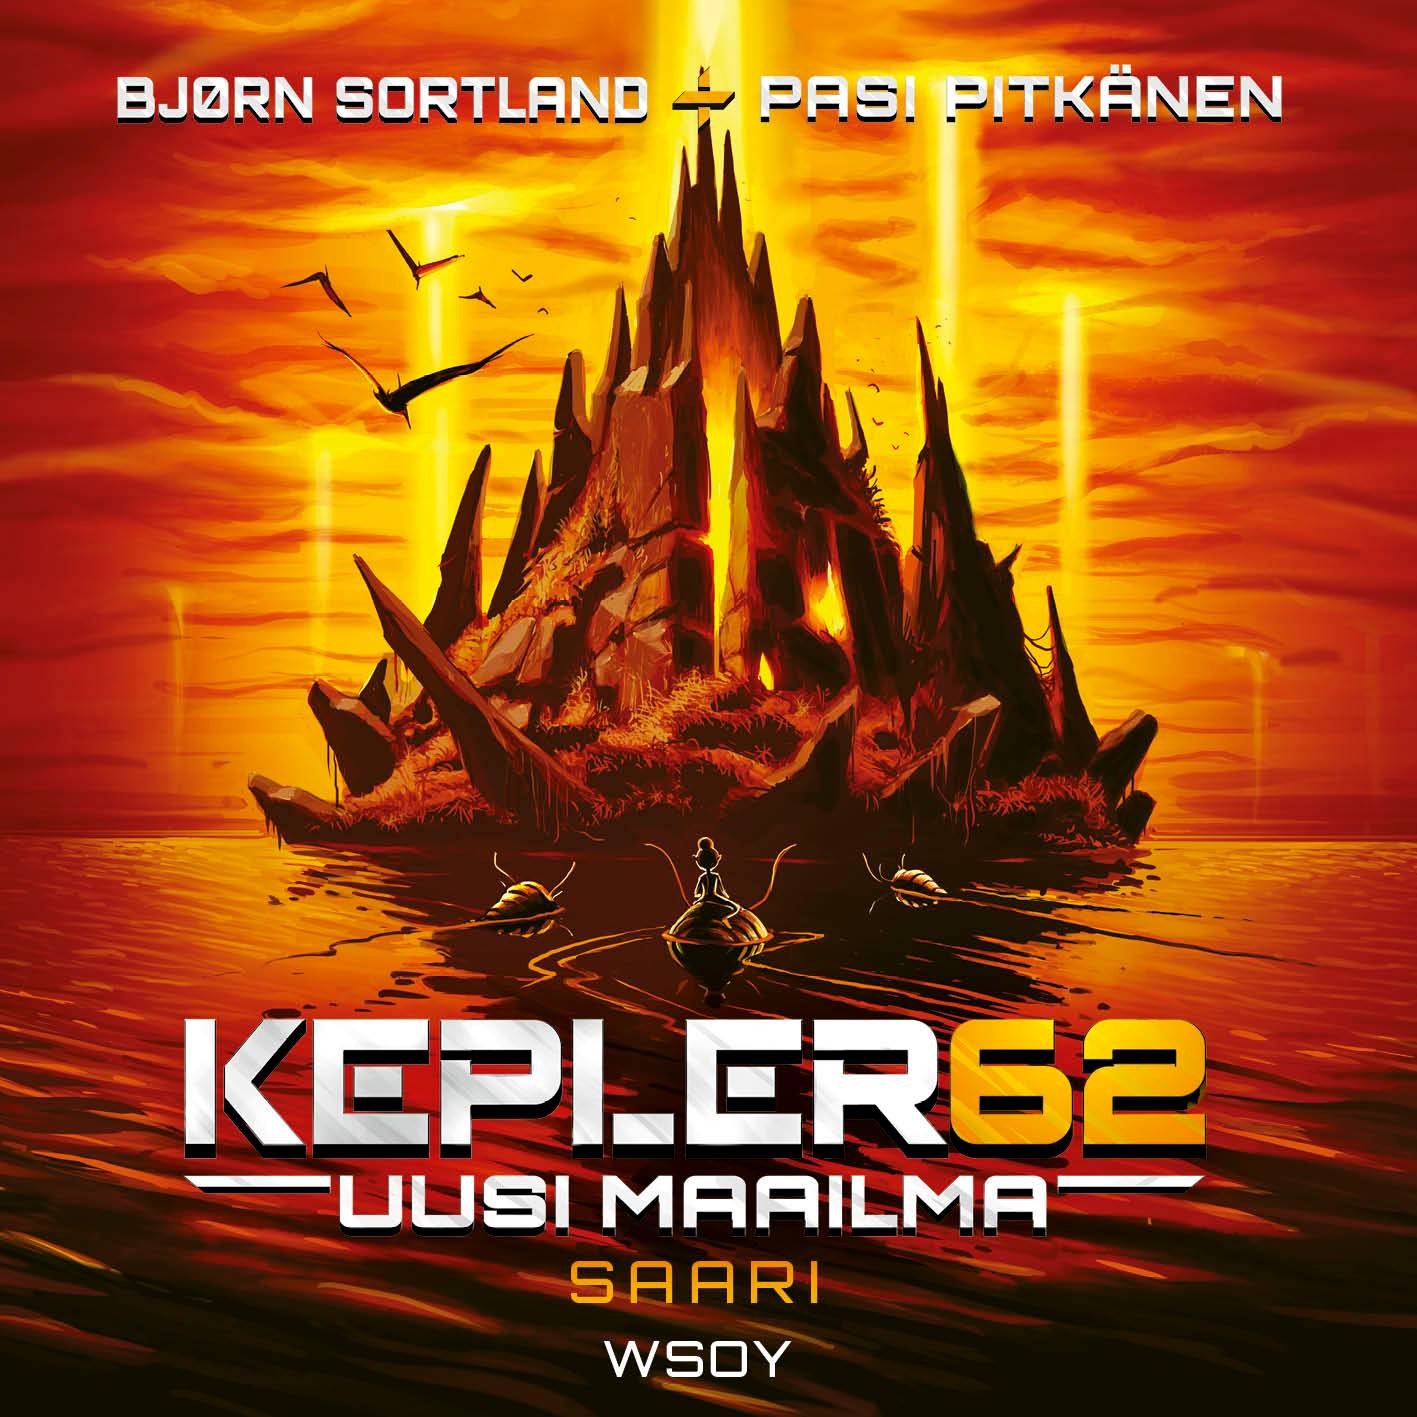 Kepler62 : uusi maailma - saari